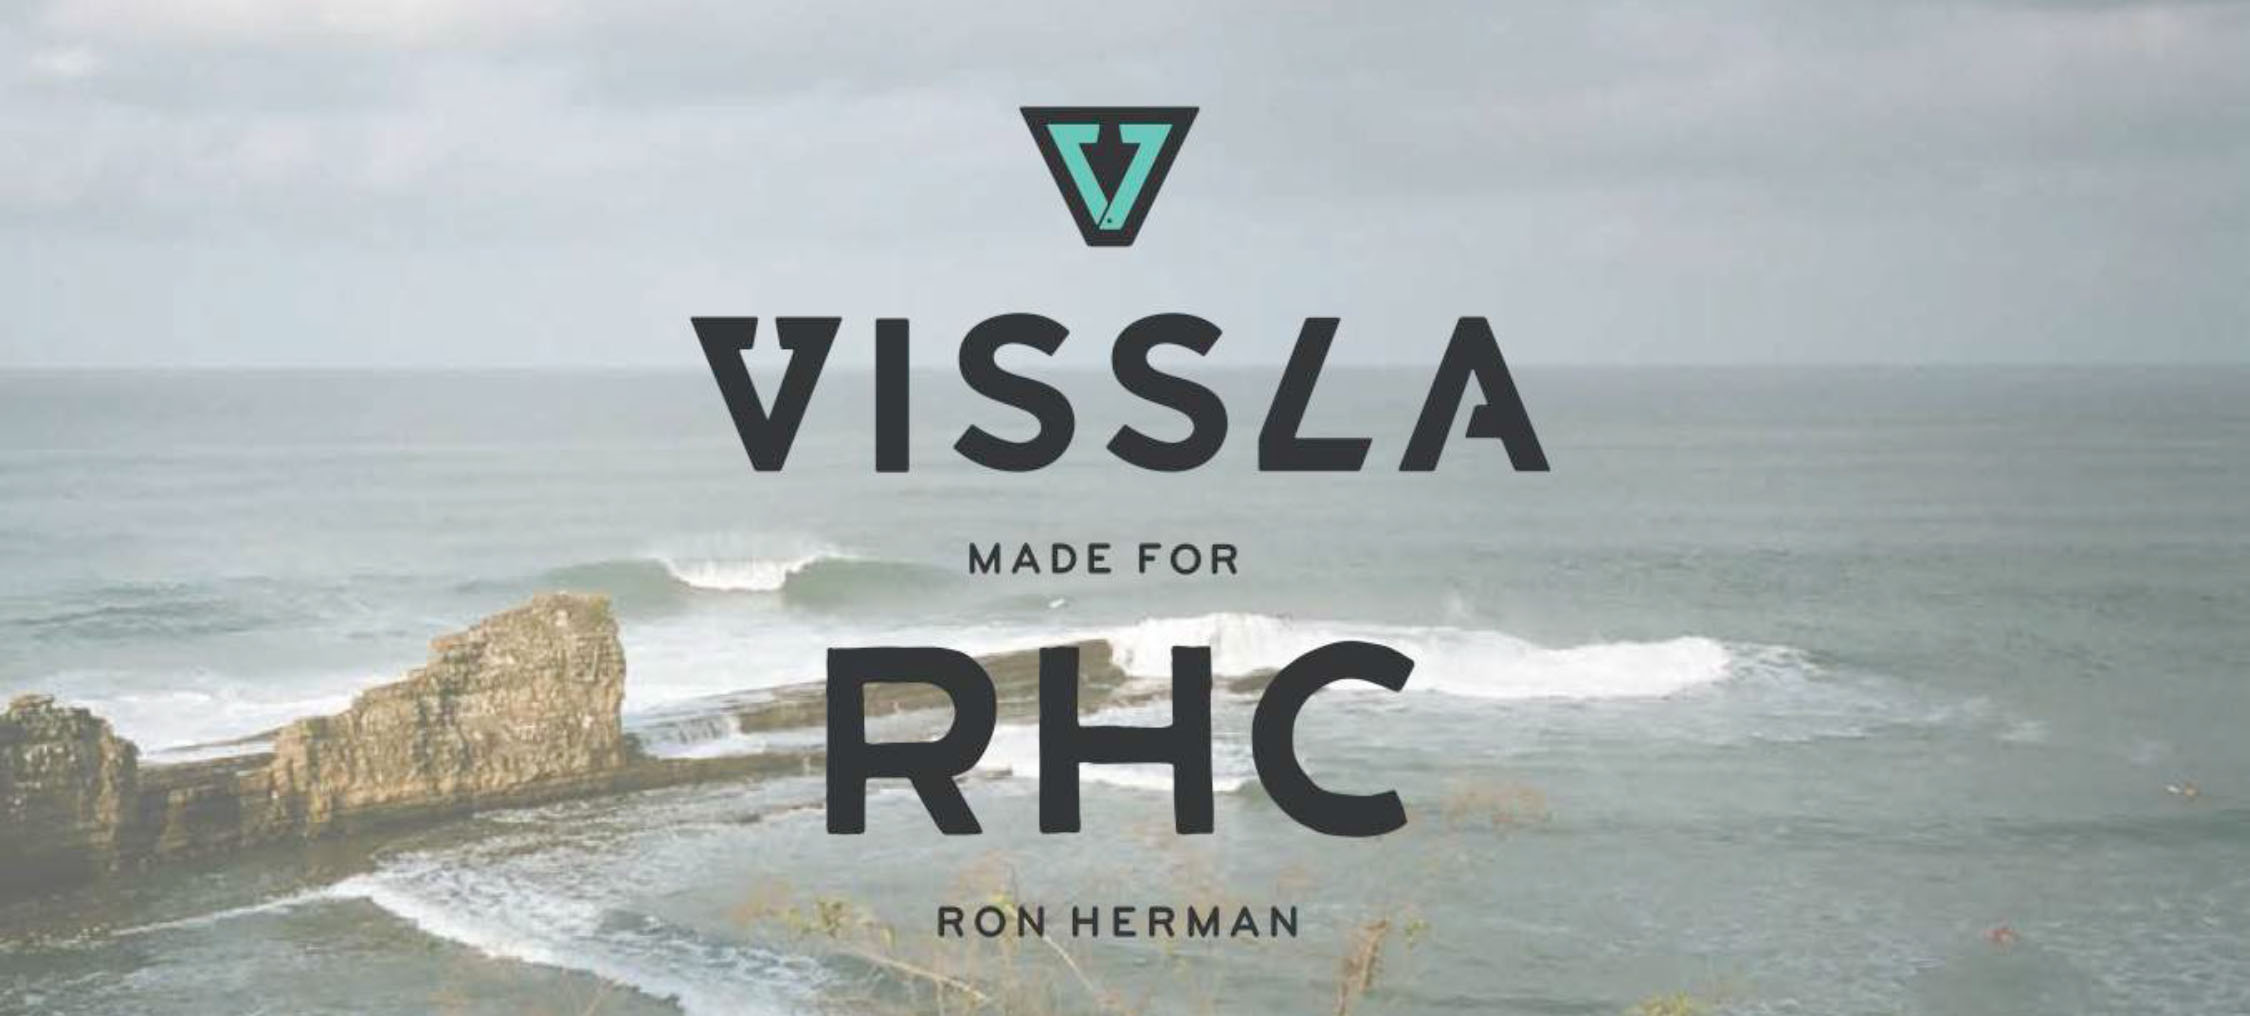 VISSLA made for RHC RON HERMAN